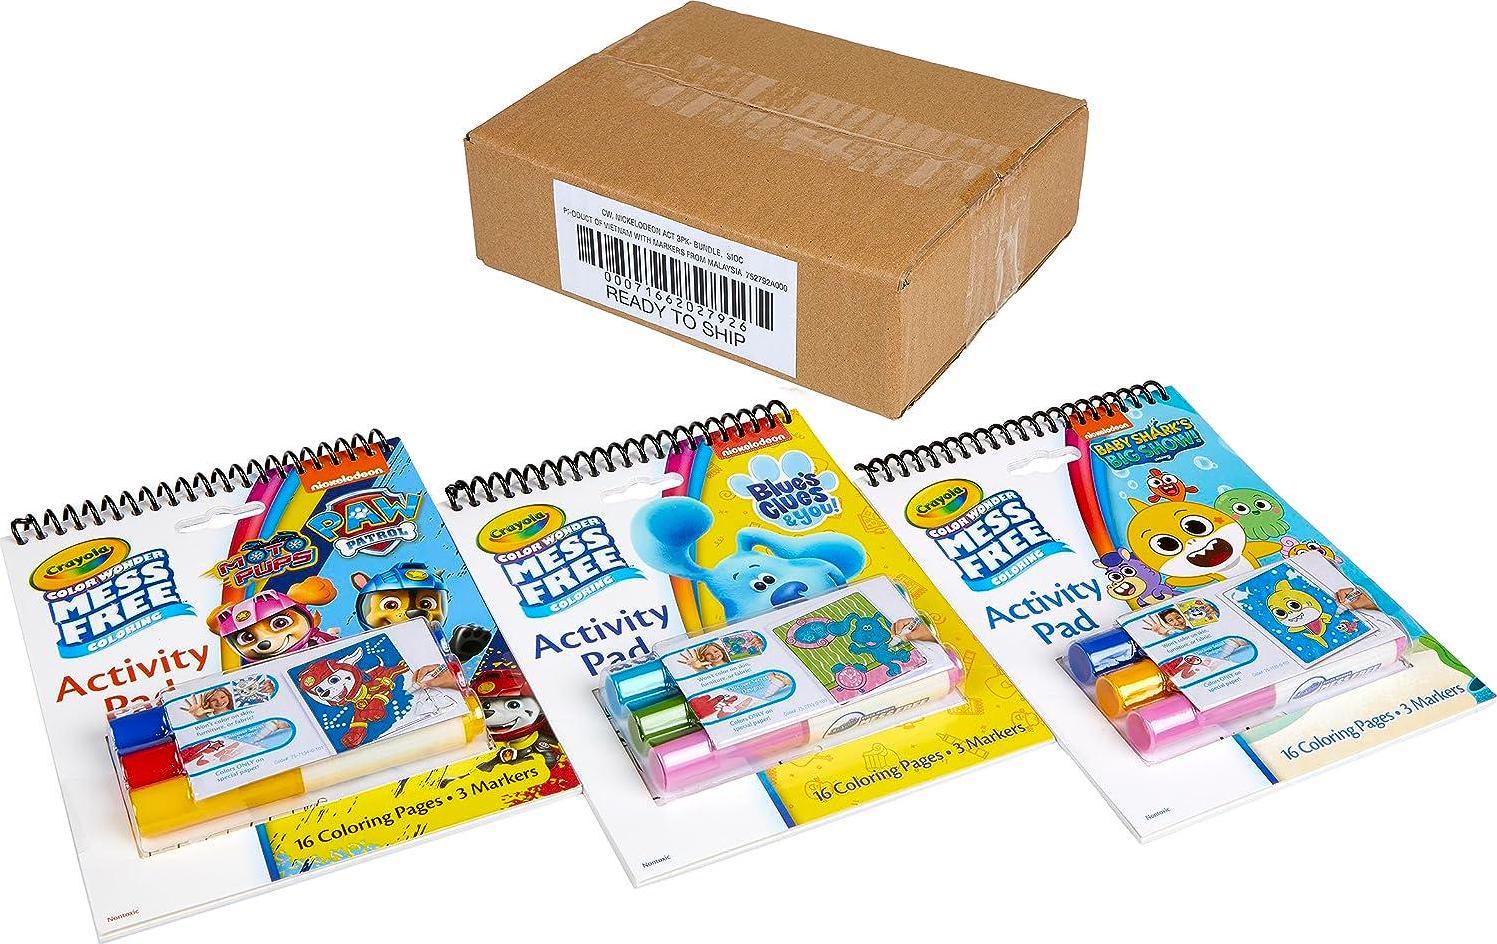 Craytastic! 100 Bulk Crayons (25 Sets of 4 Packs) - Bulk Pack of Crayons for Classroom, Kids, Party Favors, Travel Crayon Packs, Non Toxic Crayons 